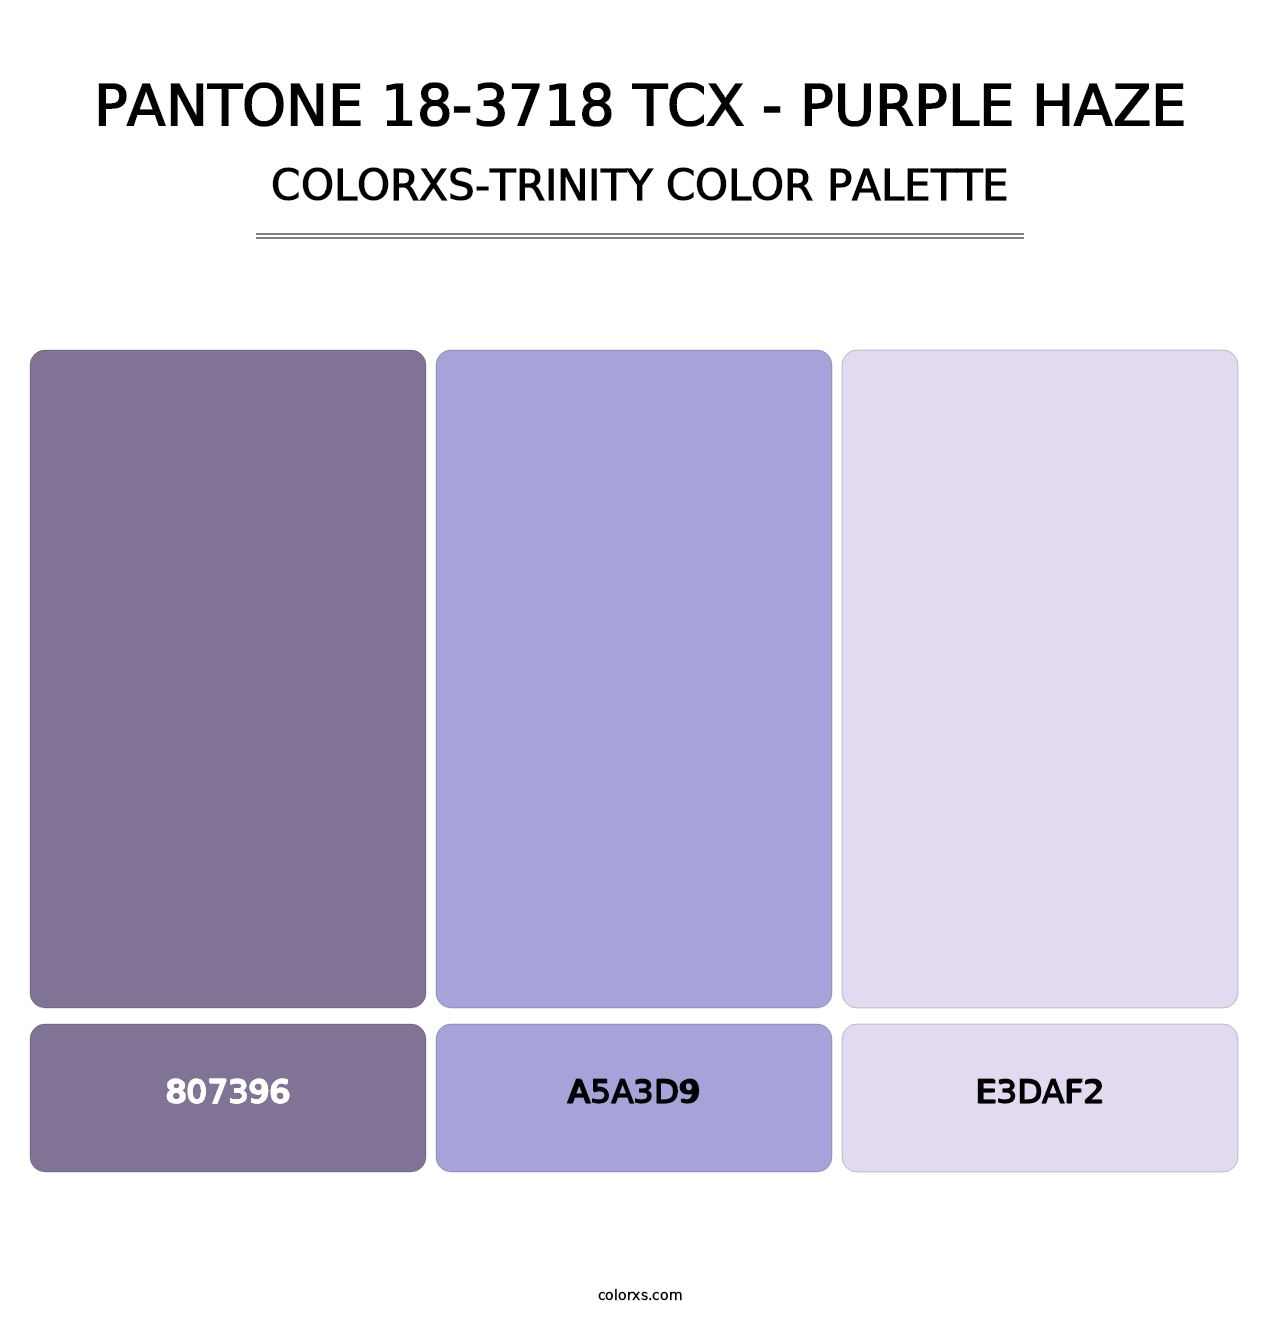 PANTONE 18-3718 TCX - Purple Haze - Colorxs Trinity Palette